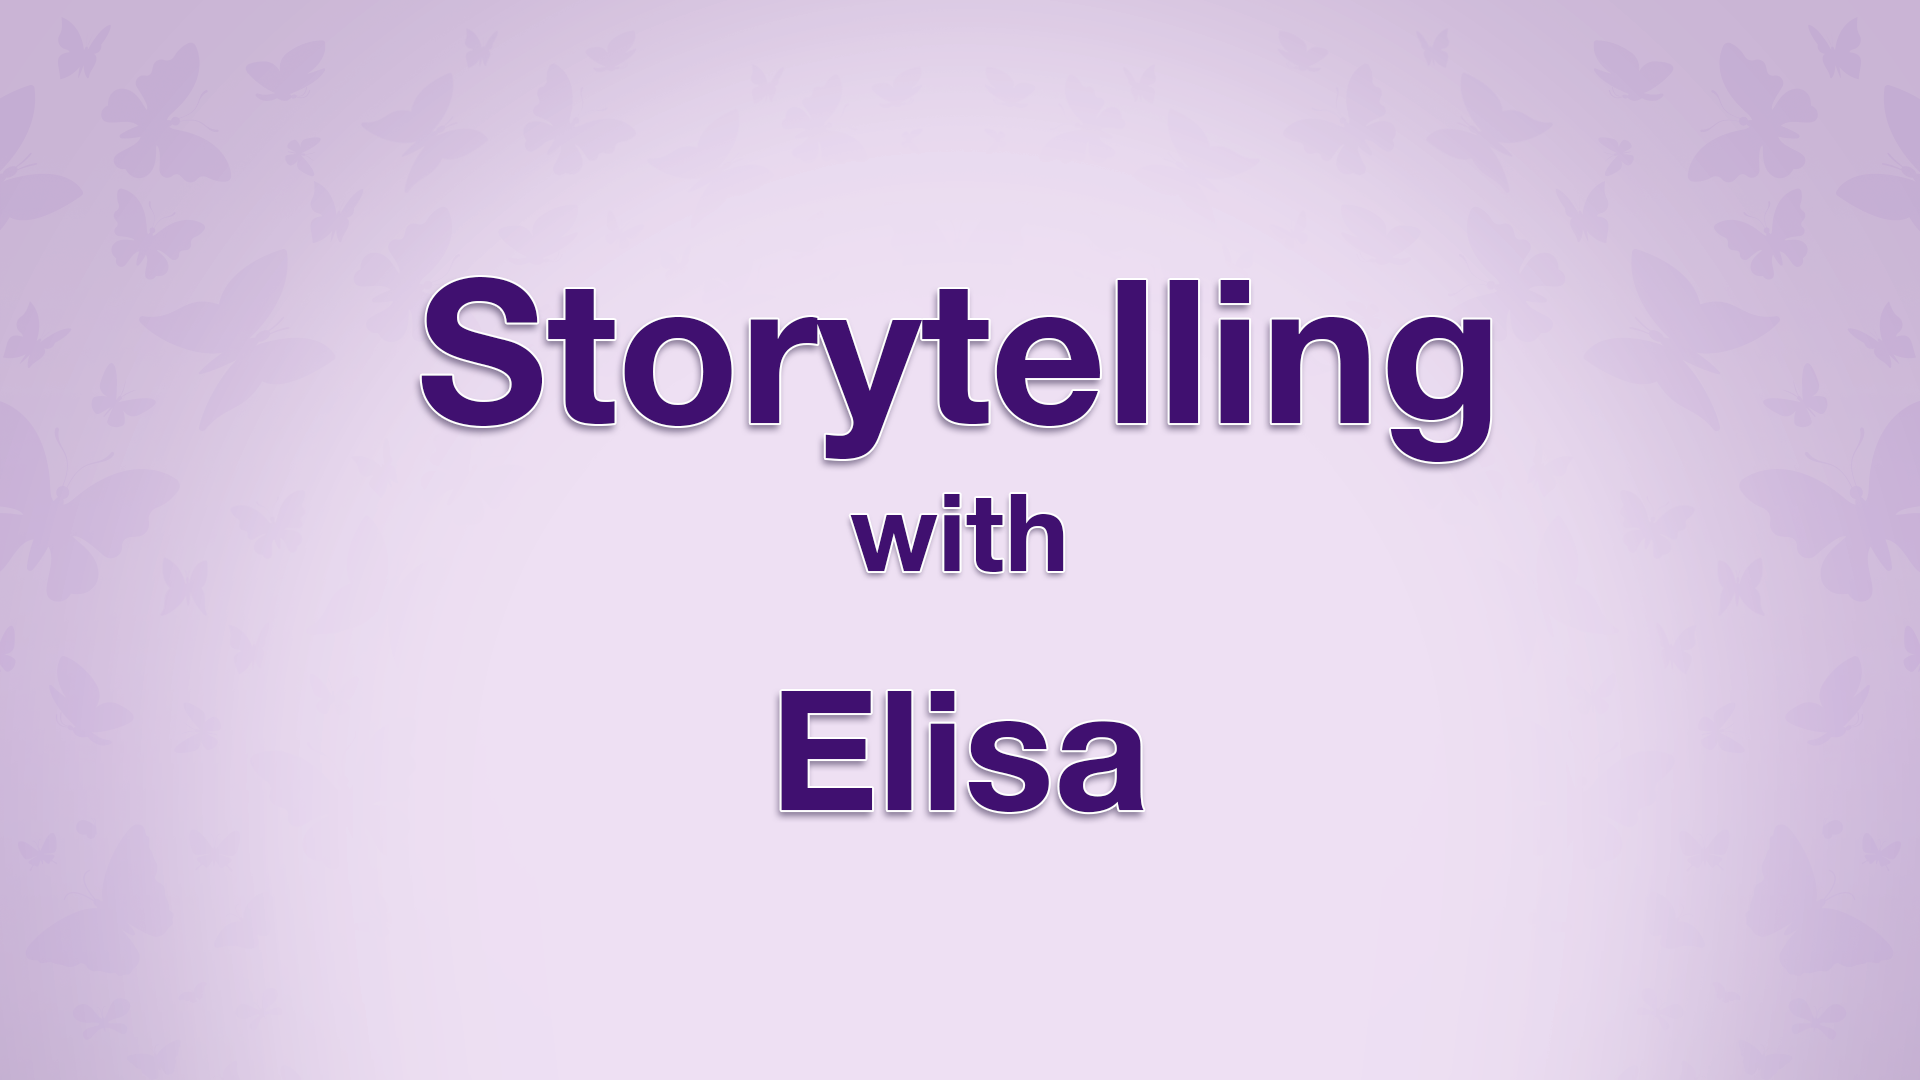 HEAR ELISA'S STORY